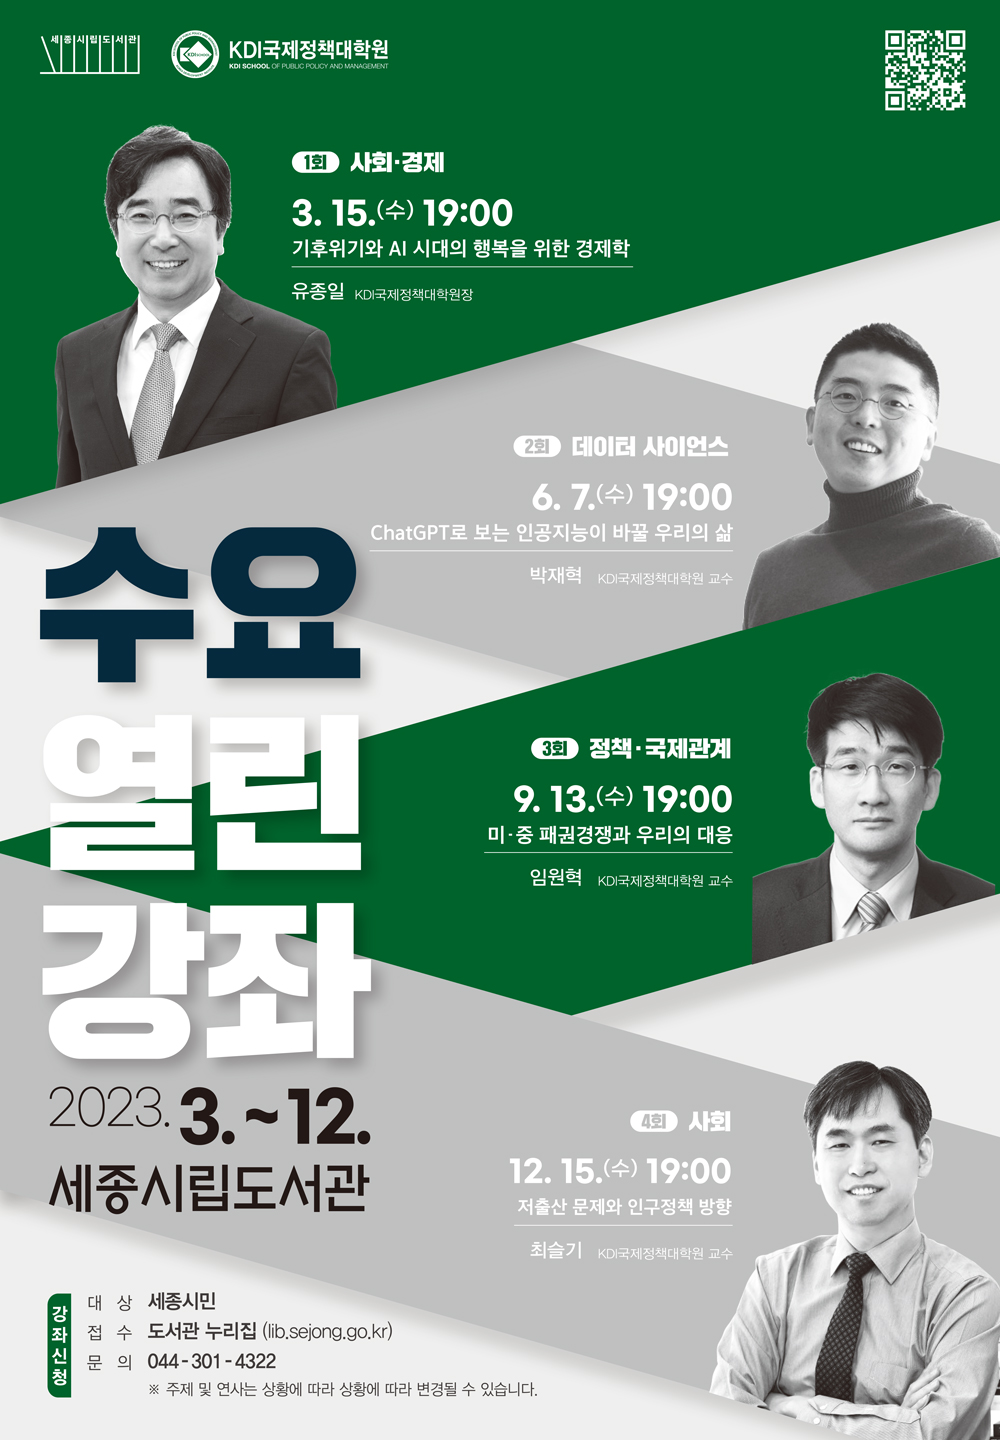 [Invitation] KDI대학원-세종시립도서관 <제2회 수요열린강좌> (6월 7일(수) 오후 7시)